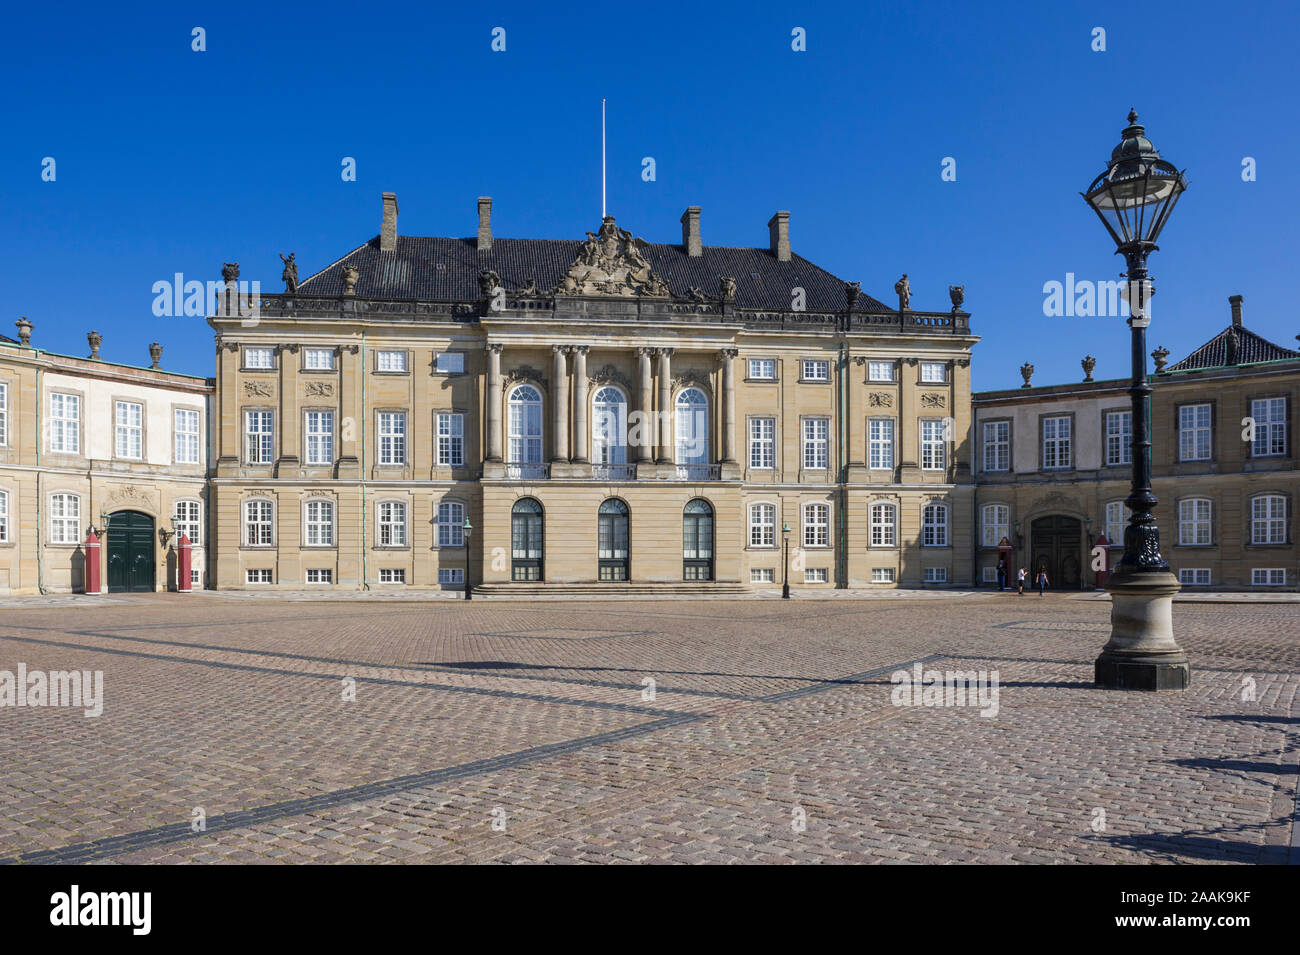 The Royal Palace Amalienborg in Copenhagen, Denmark Stock Photo